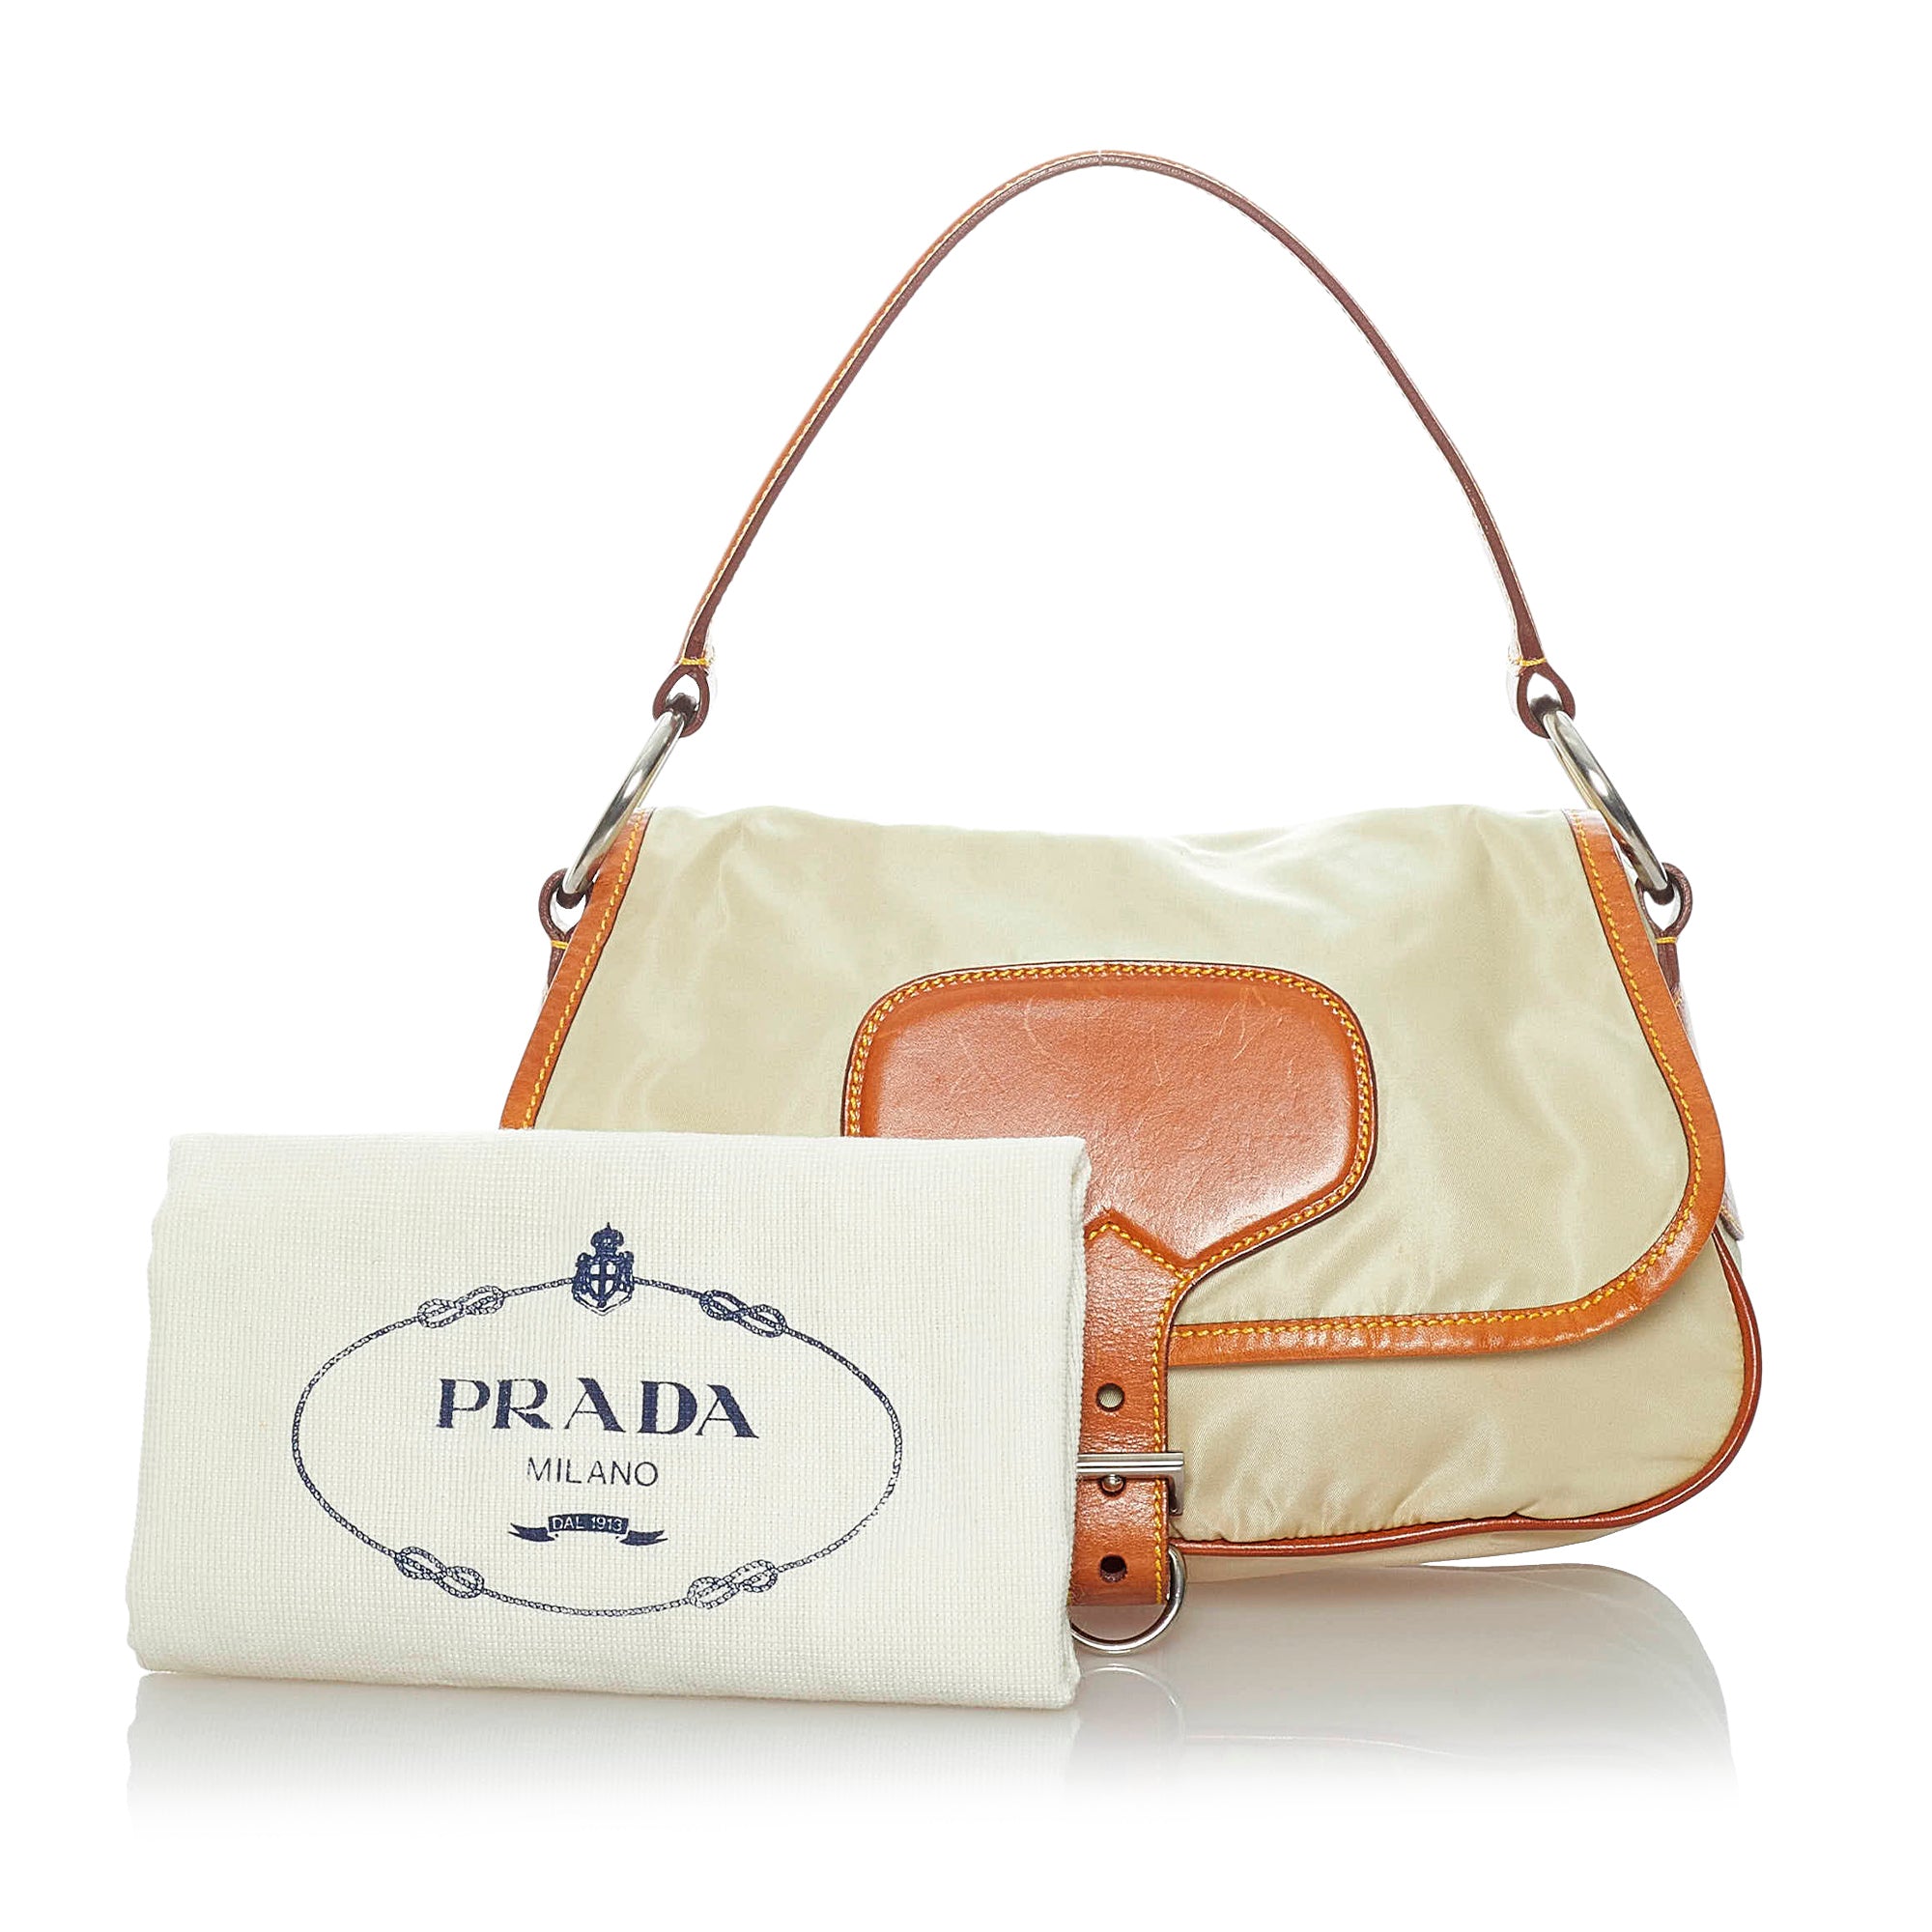 Vintage Prada Handbag  Prada handbags, Prada handbags vintage